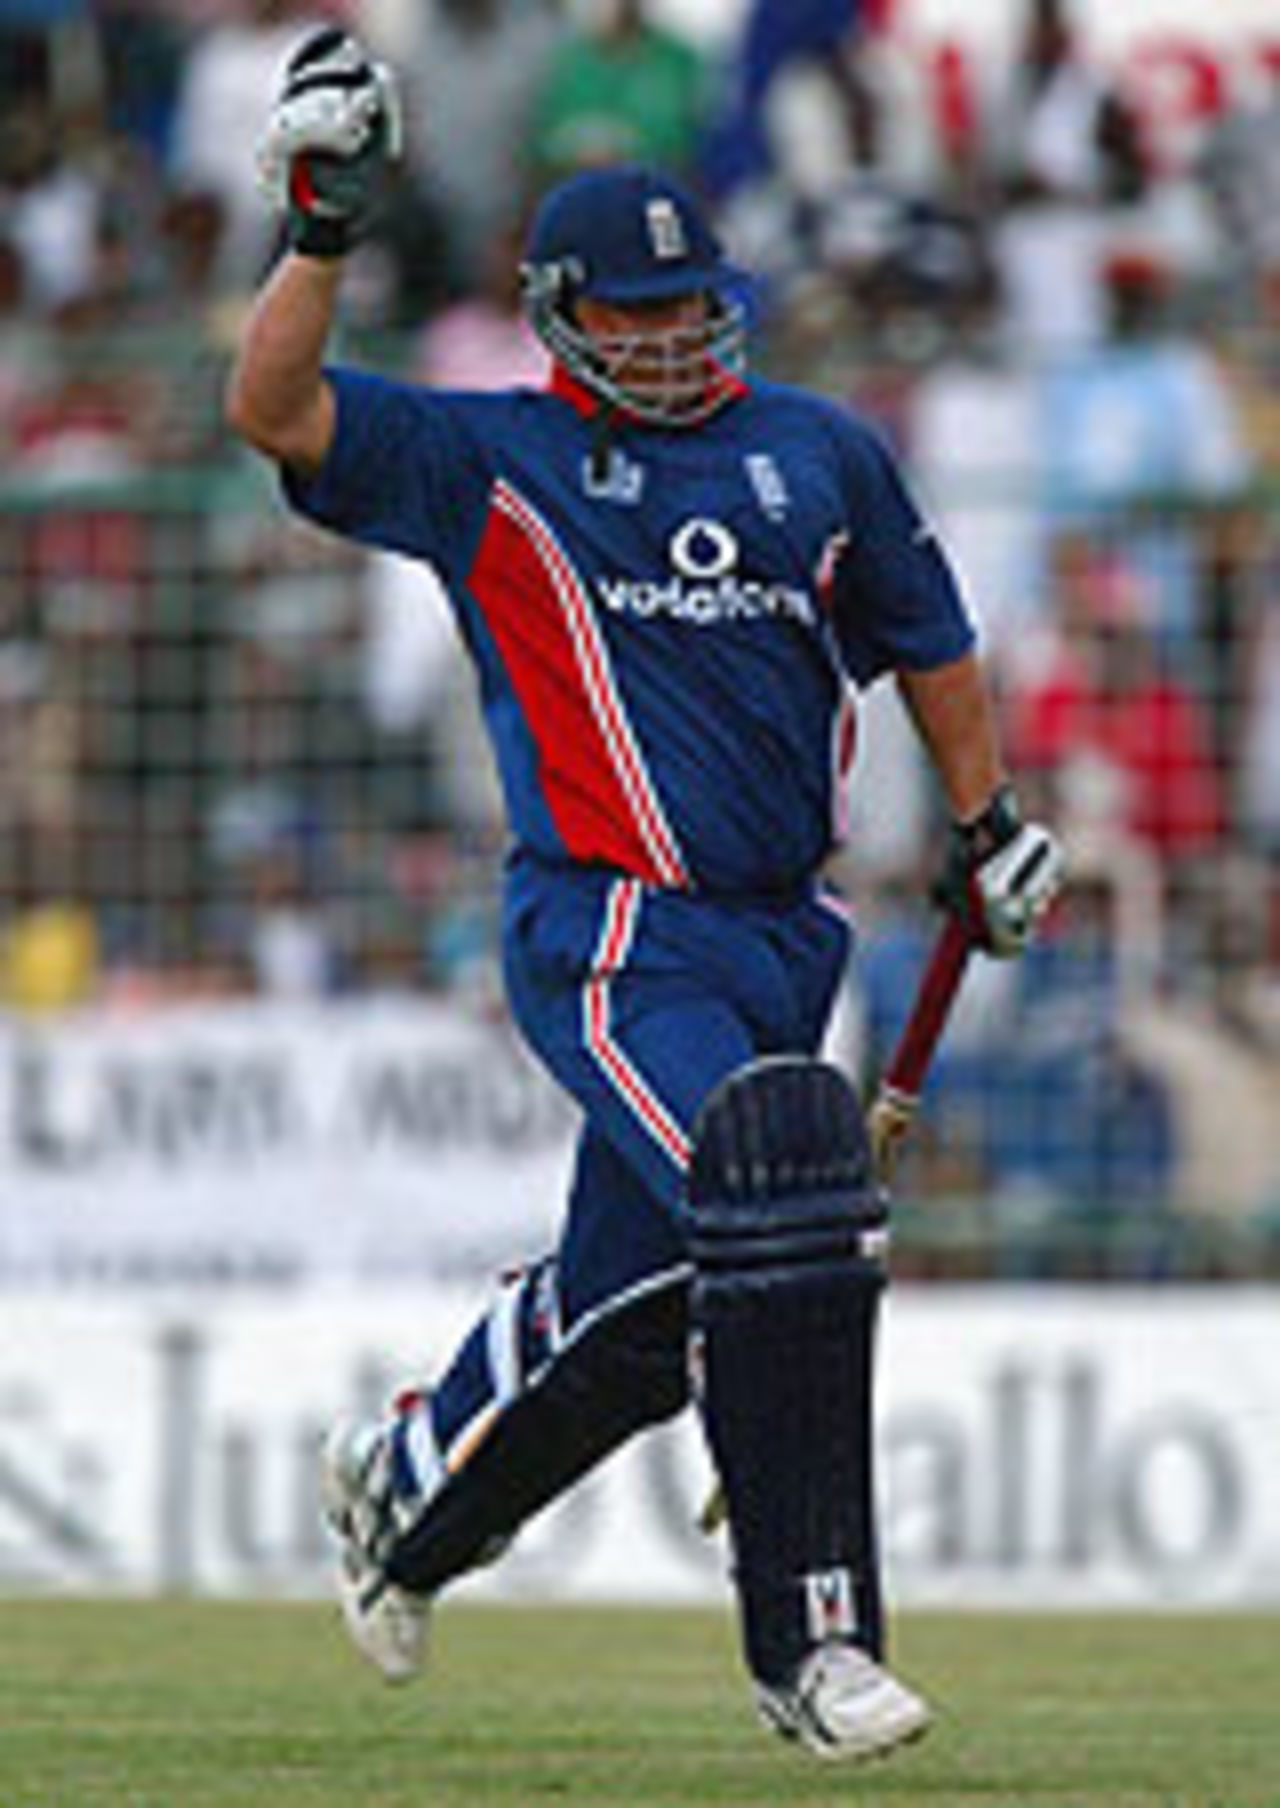 Darren Gough hits the winning runs at Bourda, West Indies v England, 1st ODI, Georgetown